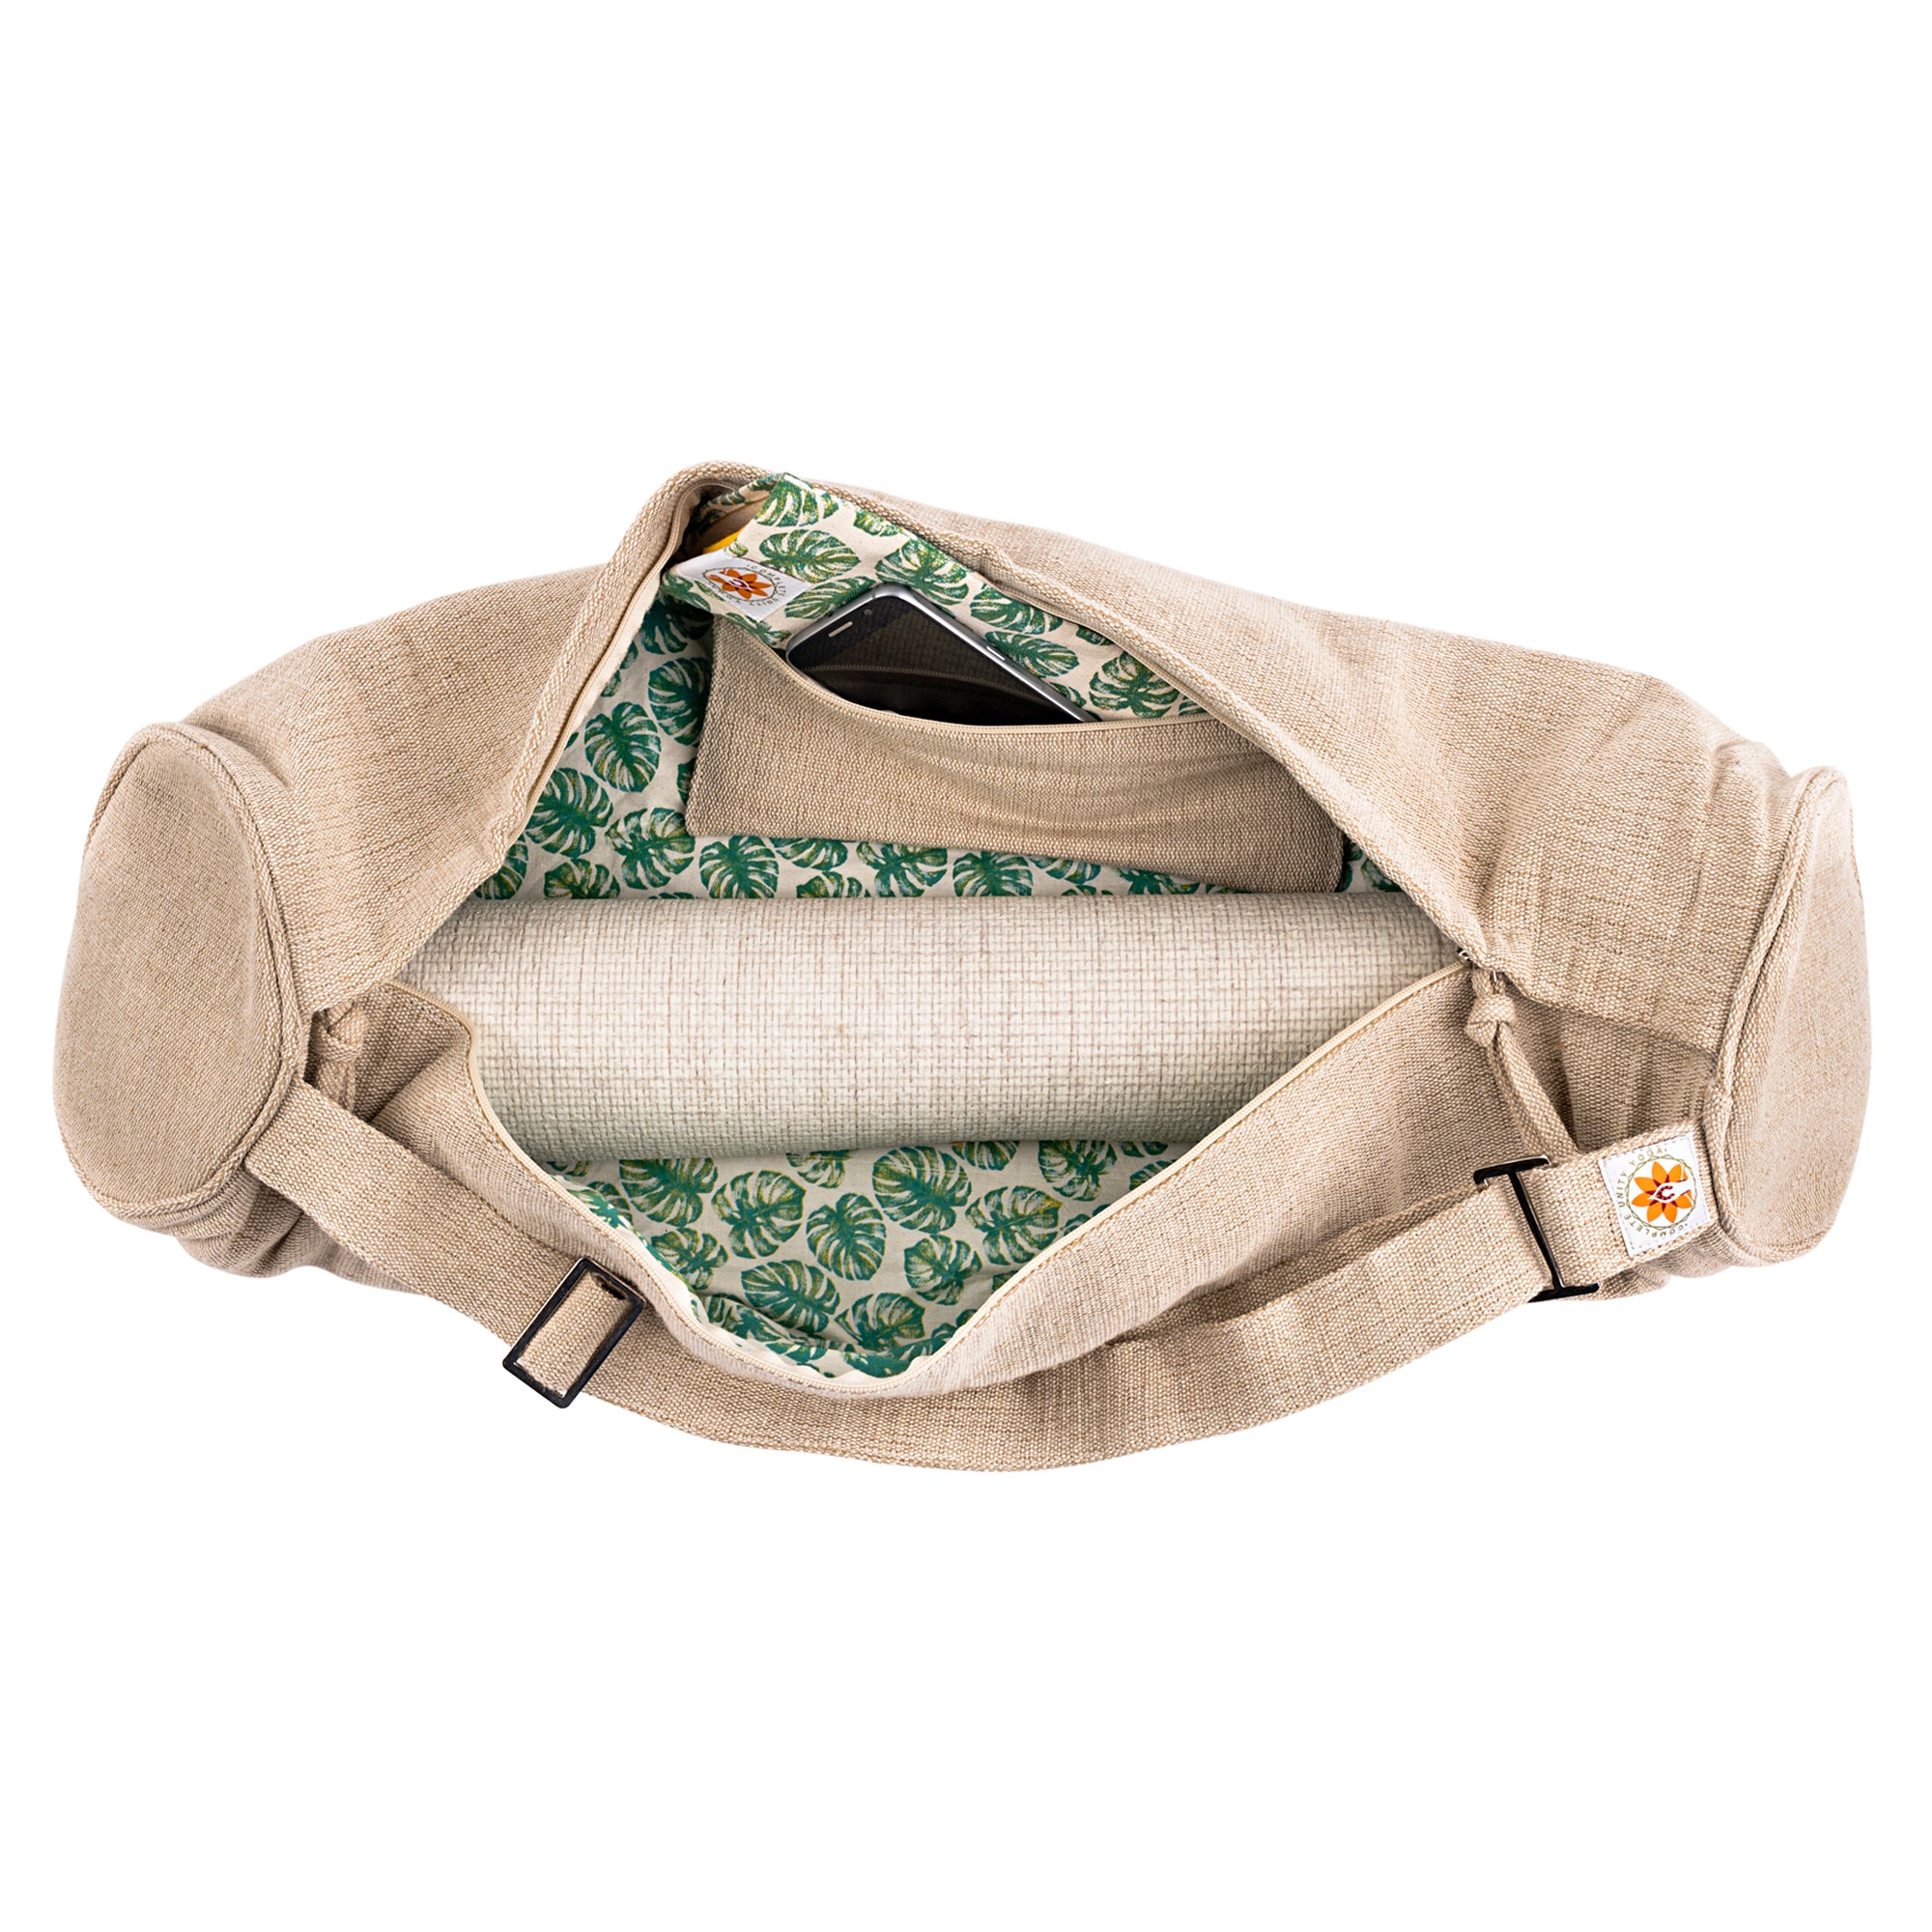 Buy Yoga Mat Bags Online - Natural Print - Sustainable Natural